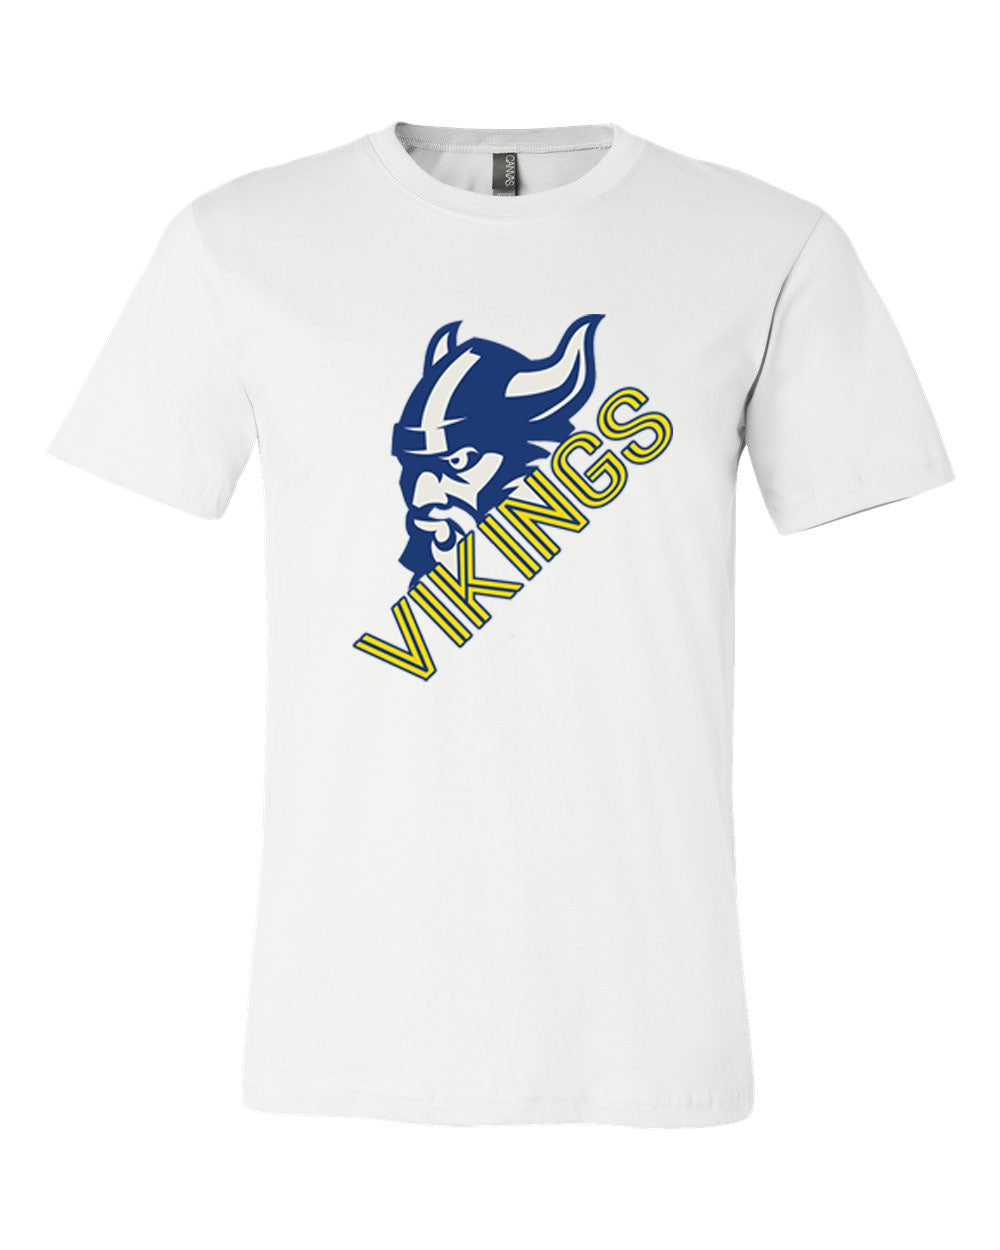 Vernon design 2 t-Shirt